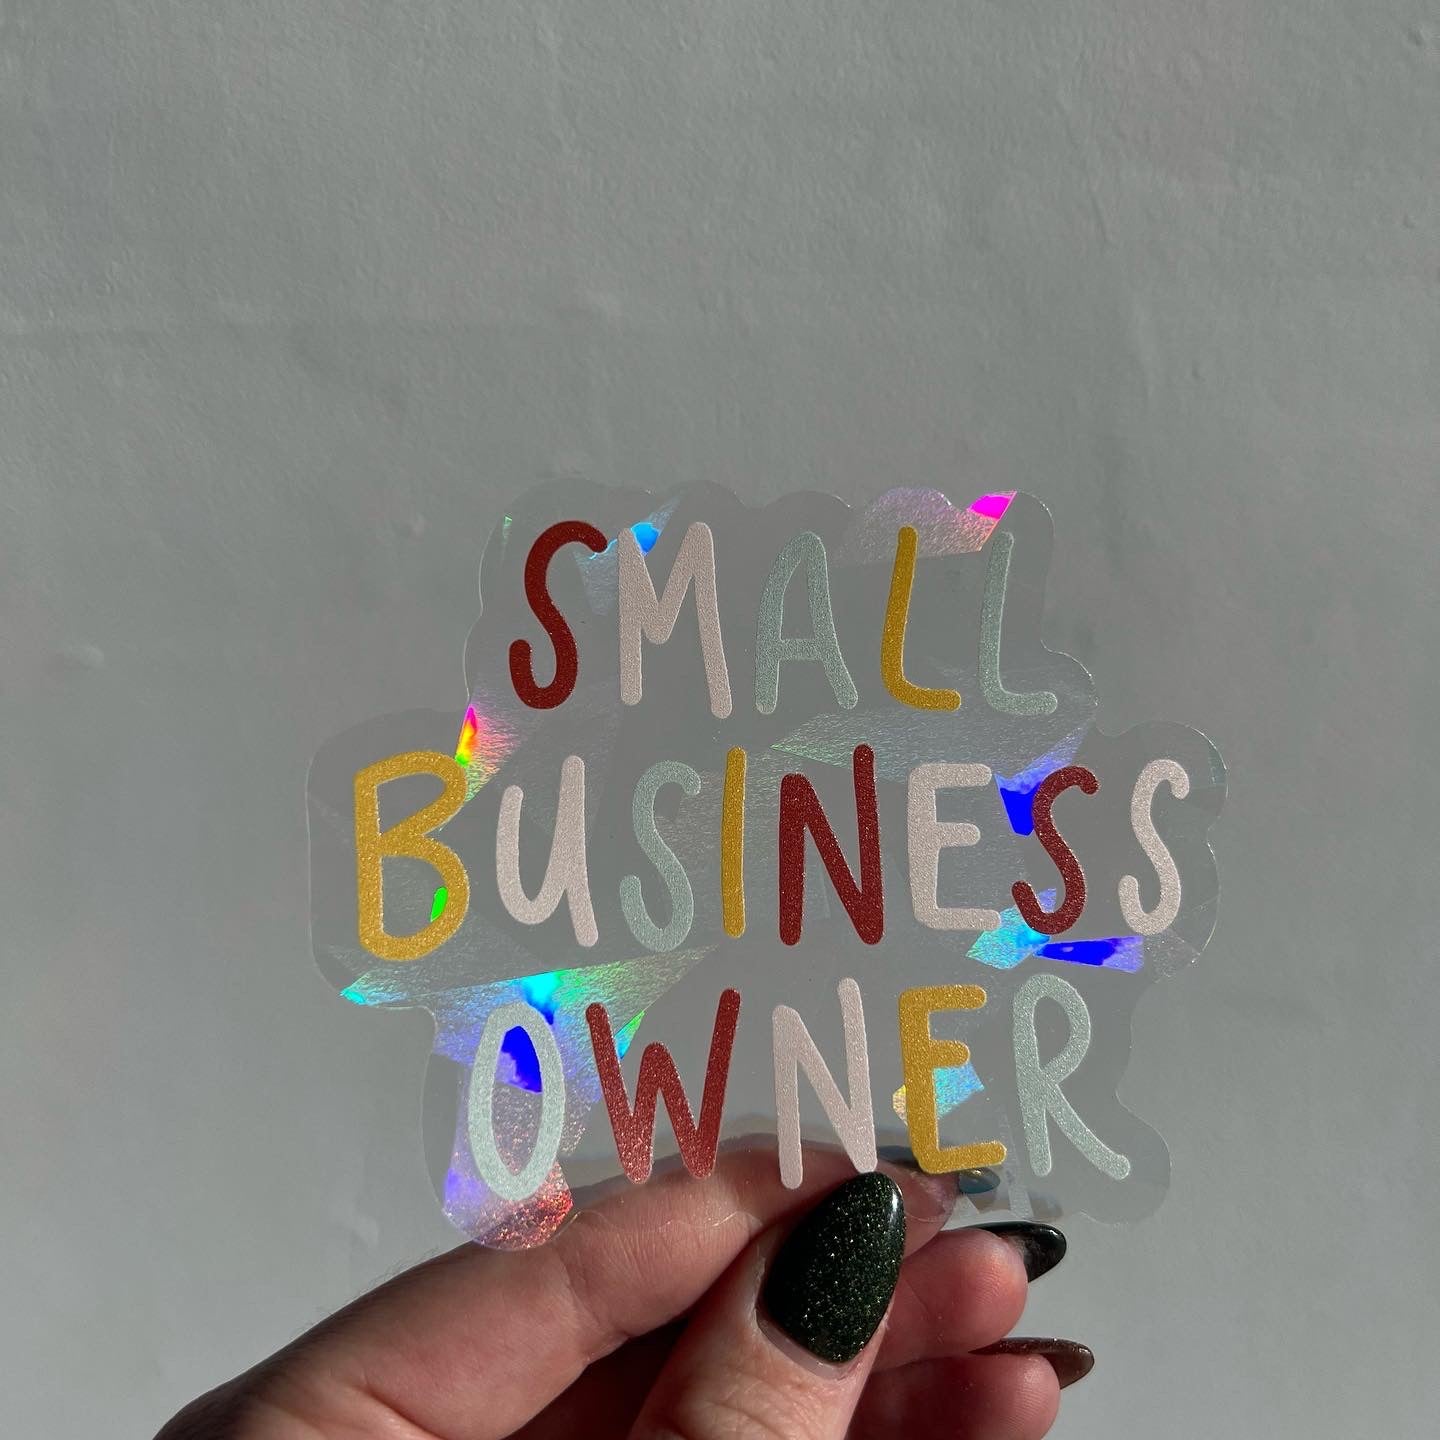 Signature Small Business Owner Suncatcher Rainbow Window Decal